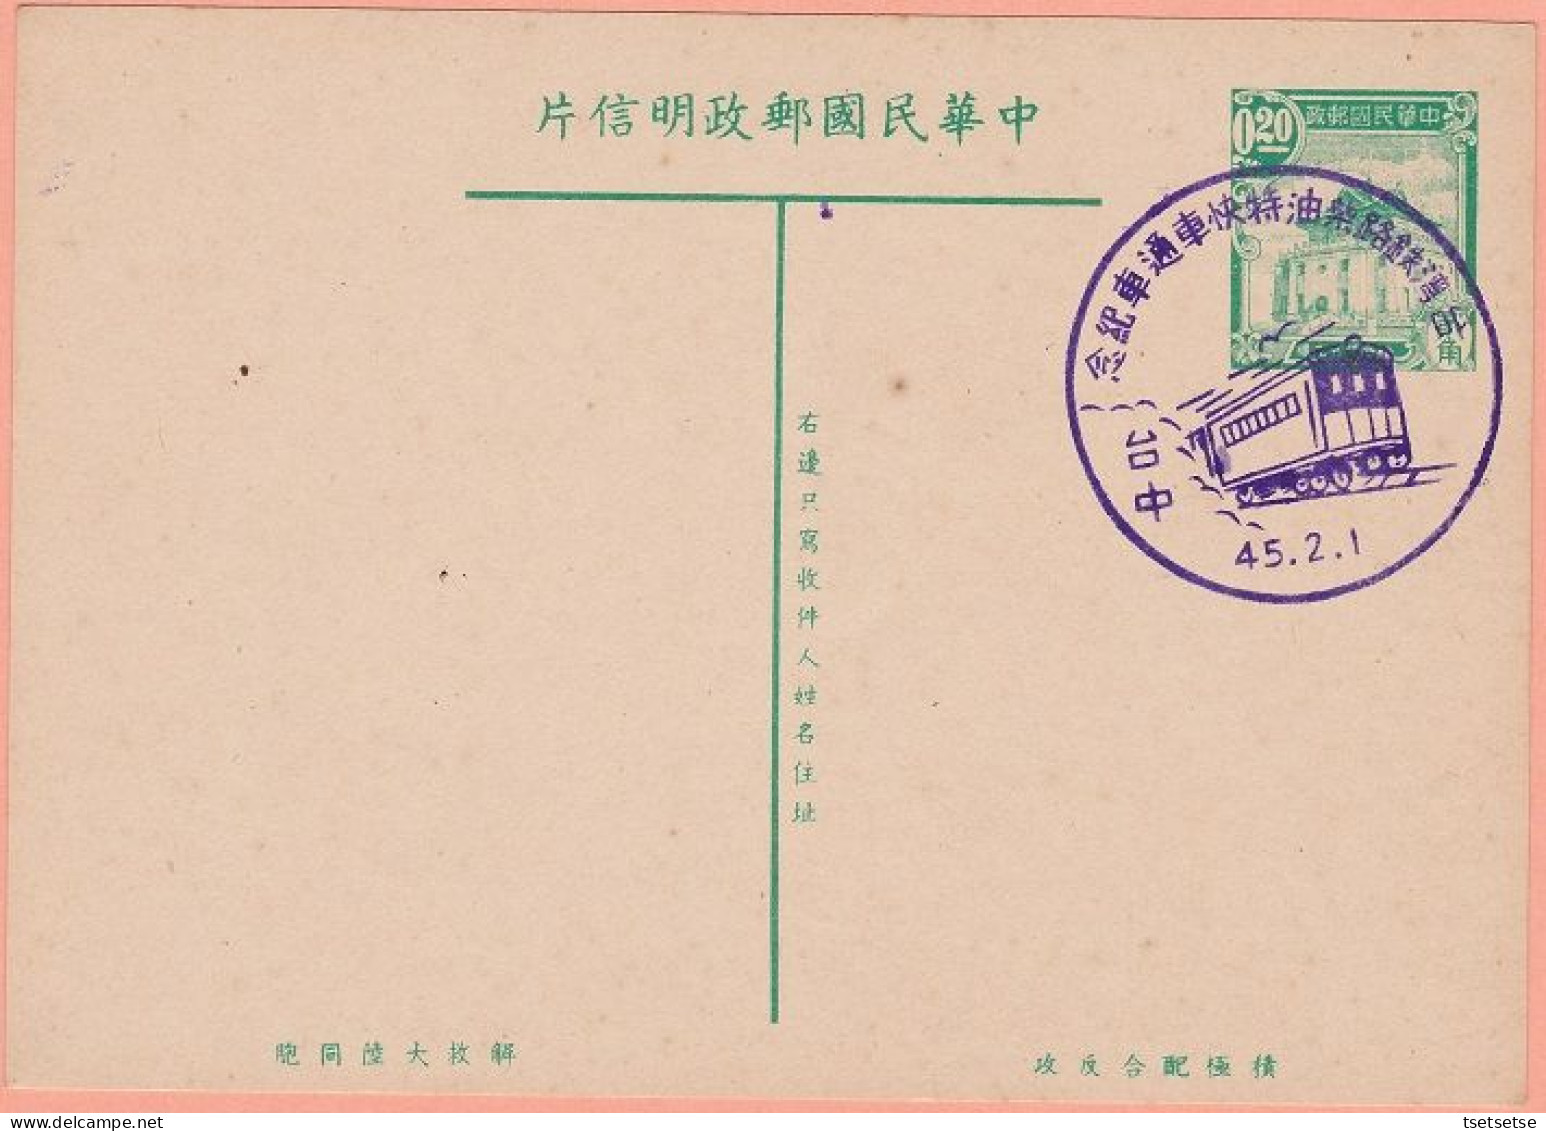 1956 RO China Taiwan Train Express Postcard - Entiers Postaux